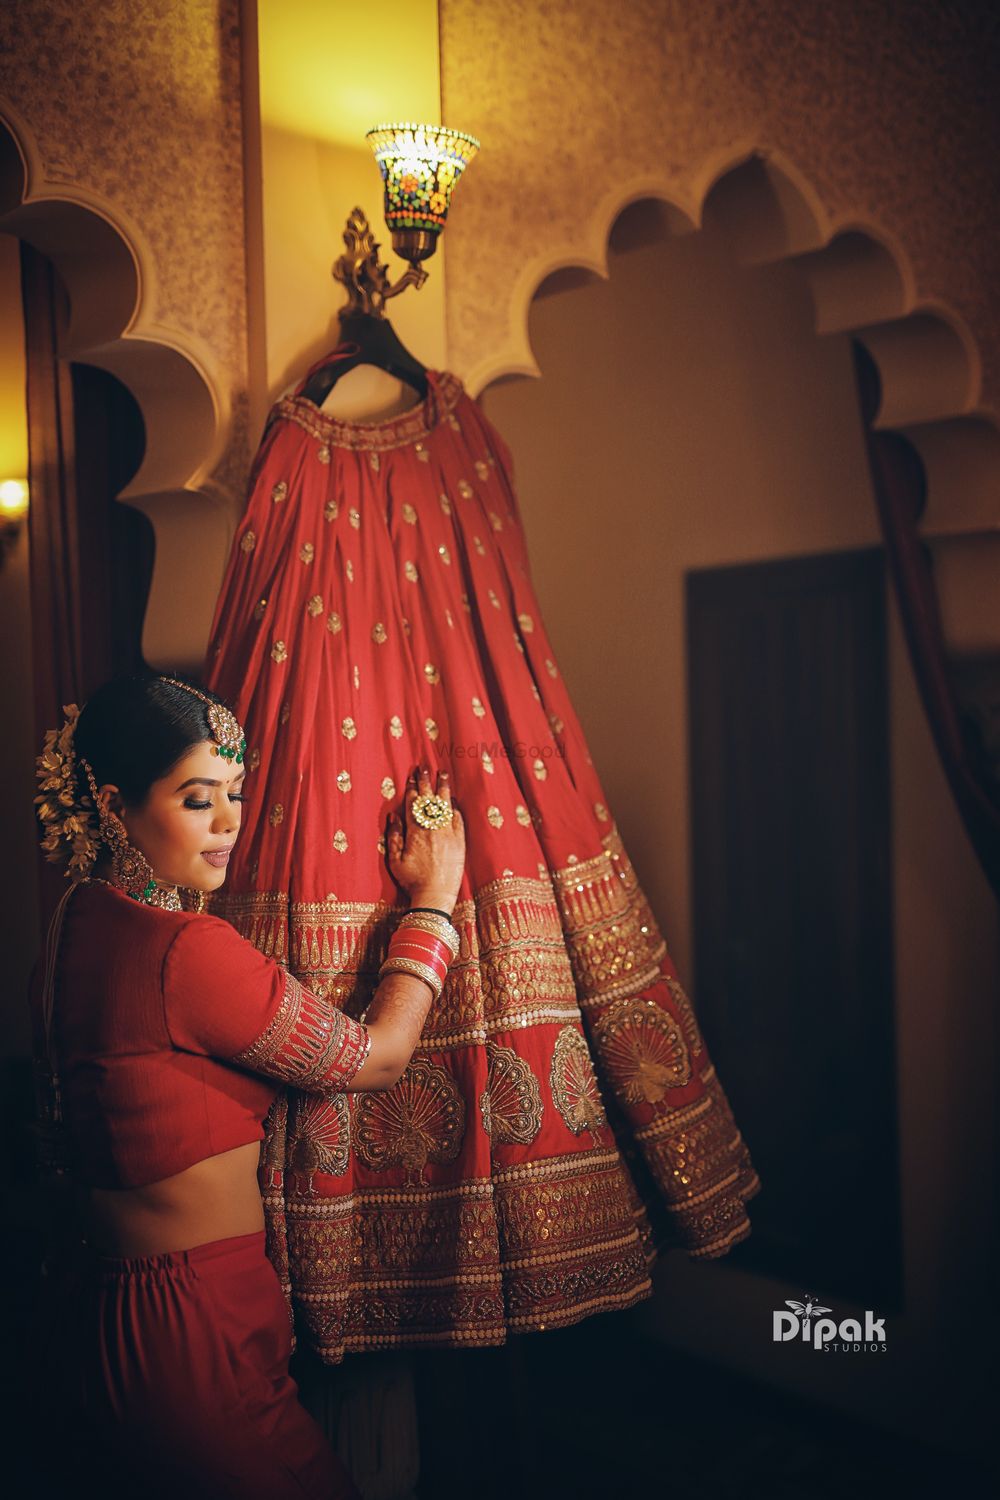 Photo of Bride posing with red lehenga on hanger